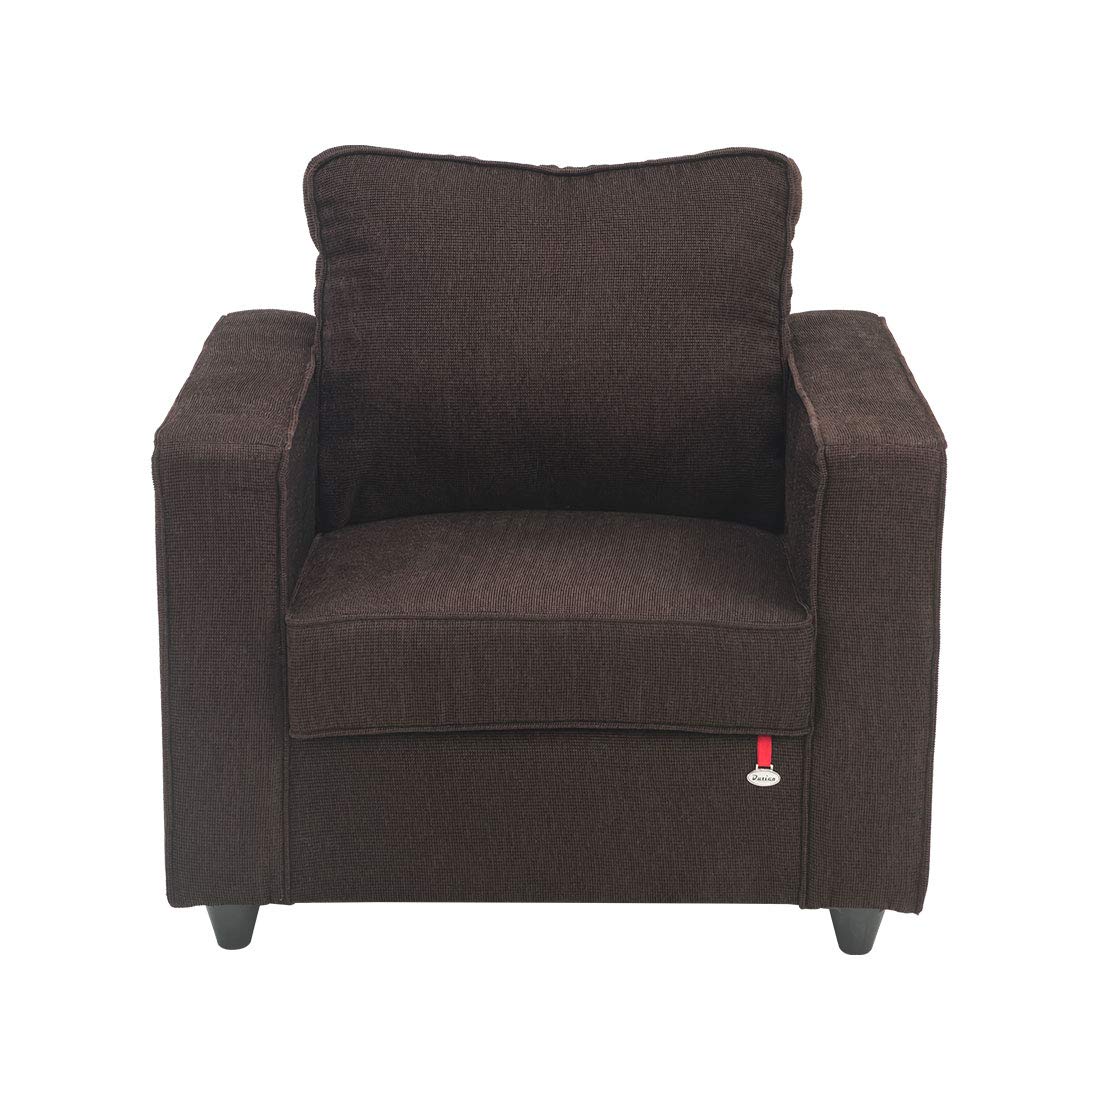 Durian Ralph Fabric Single Seater Sofa (Matte Finish, Indimo Brown) (Ralph/1)